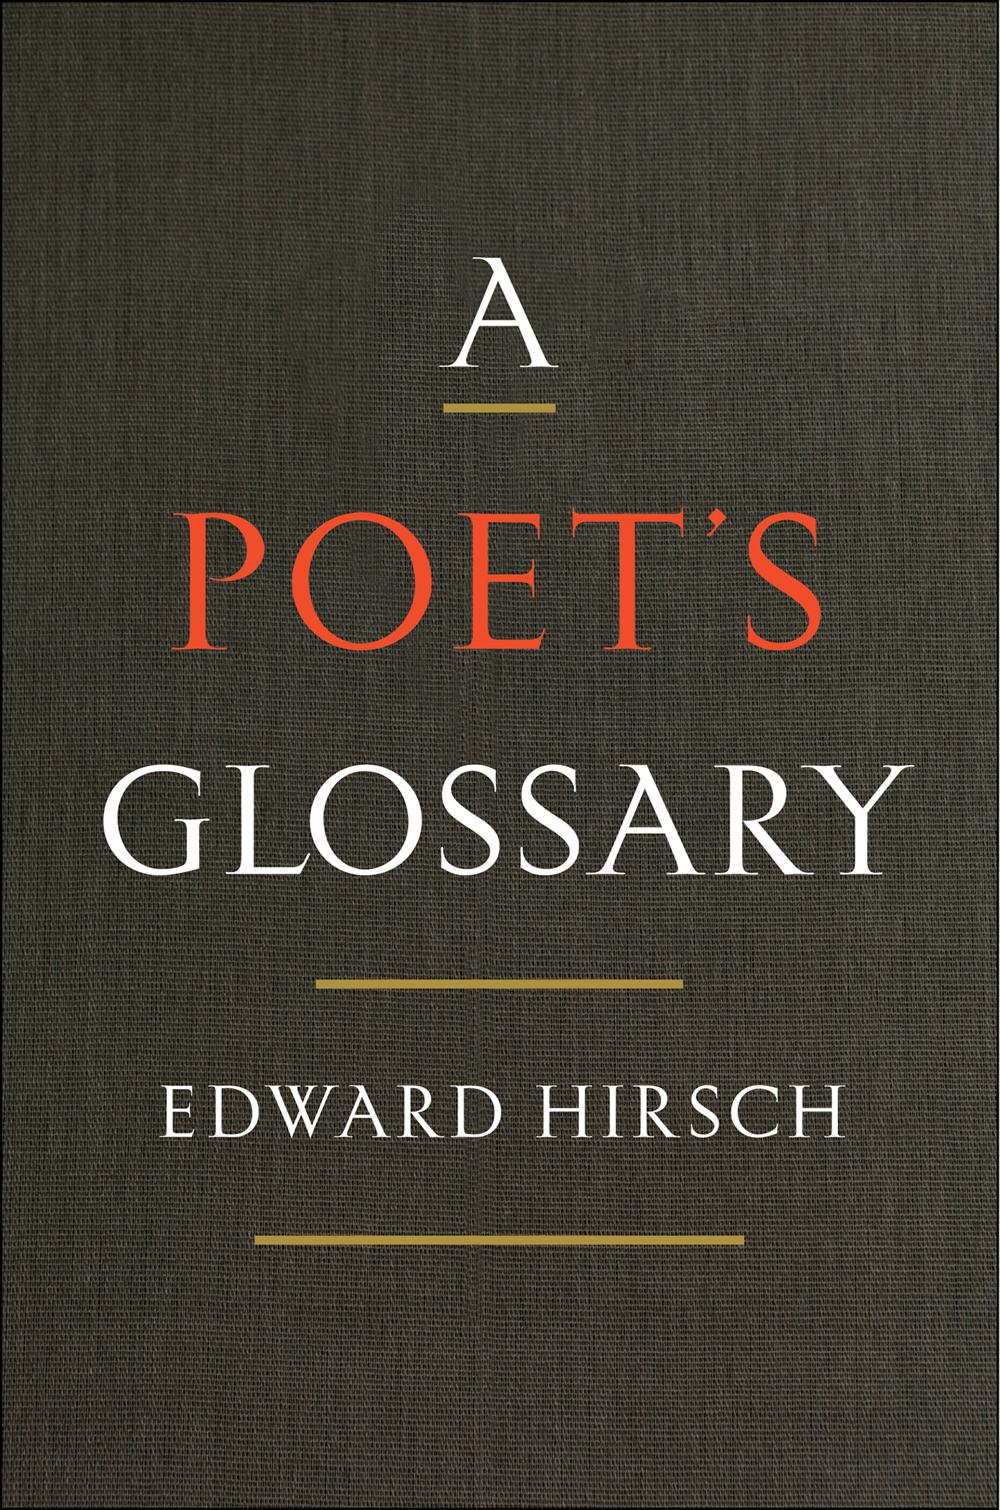 A Poet's Glossary